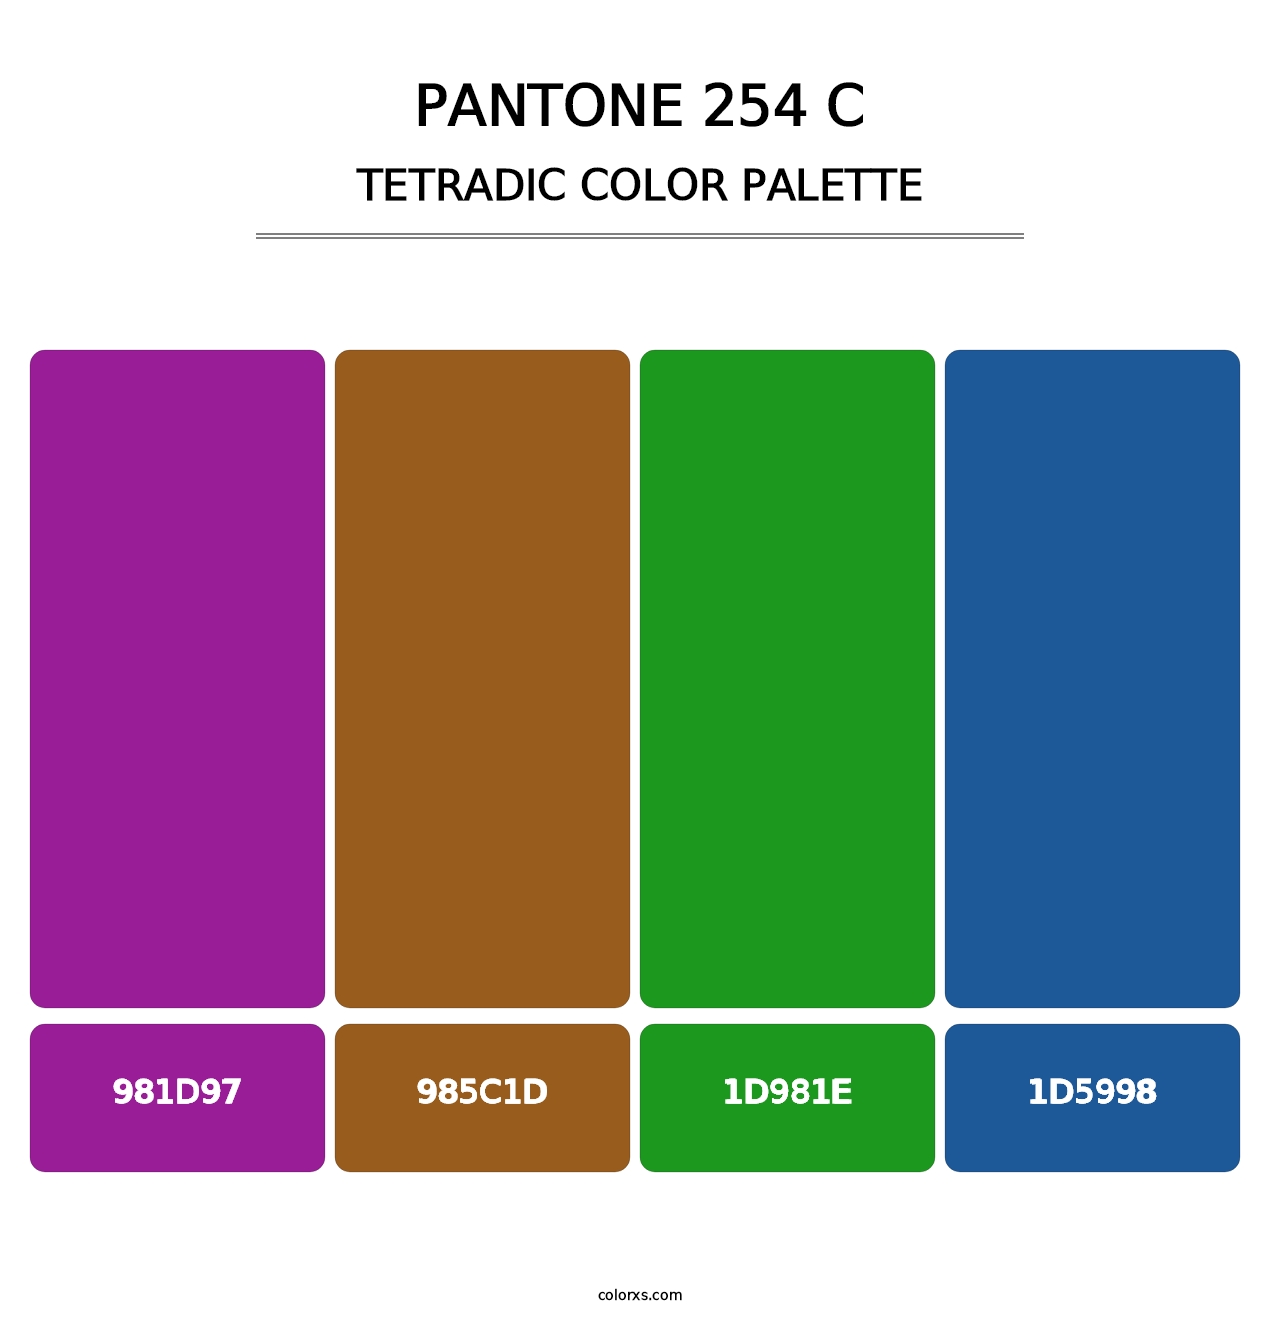 PANTONE 254 C - Tetradic Color Palette